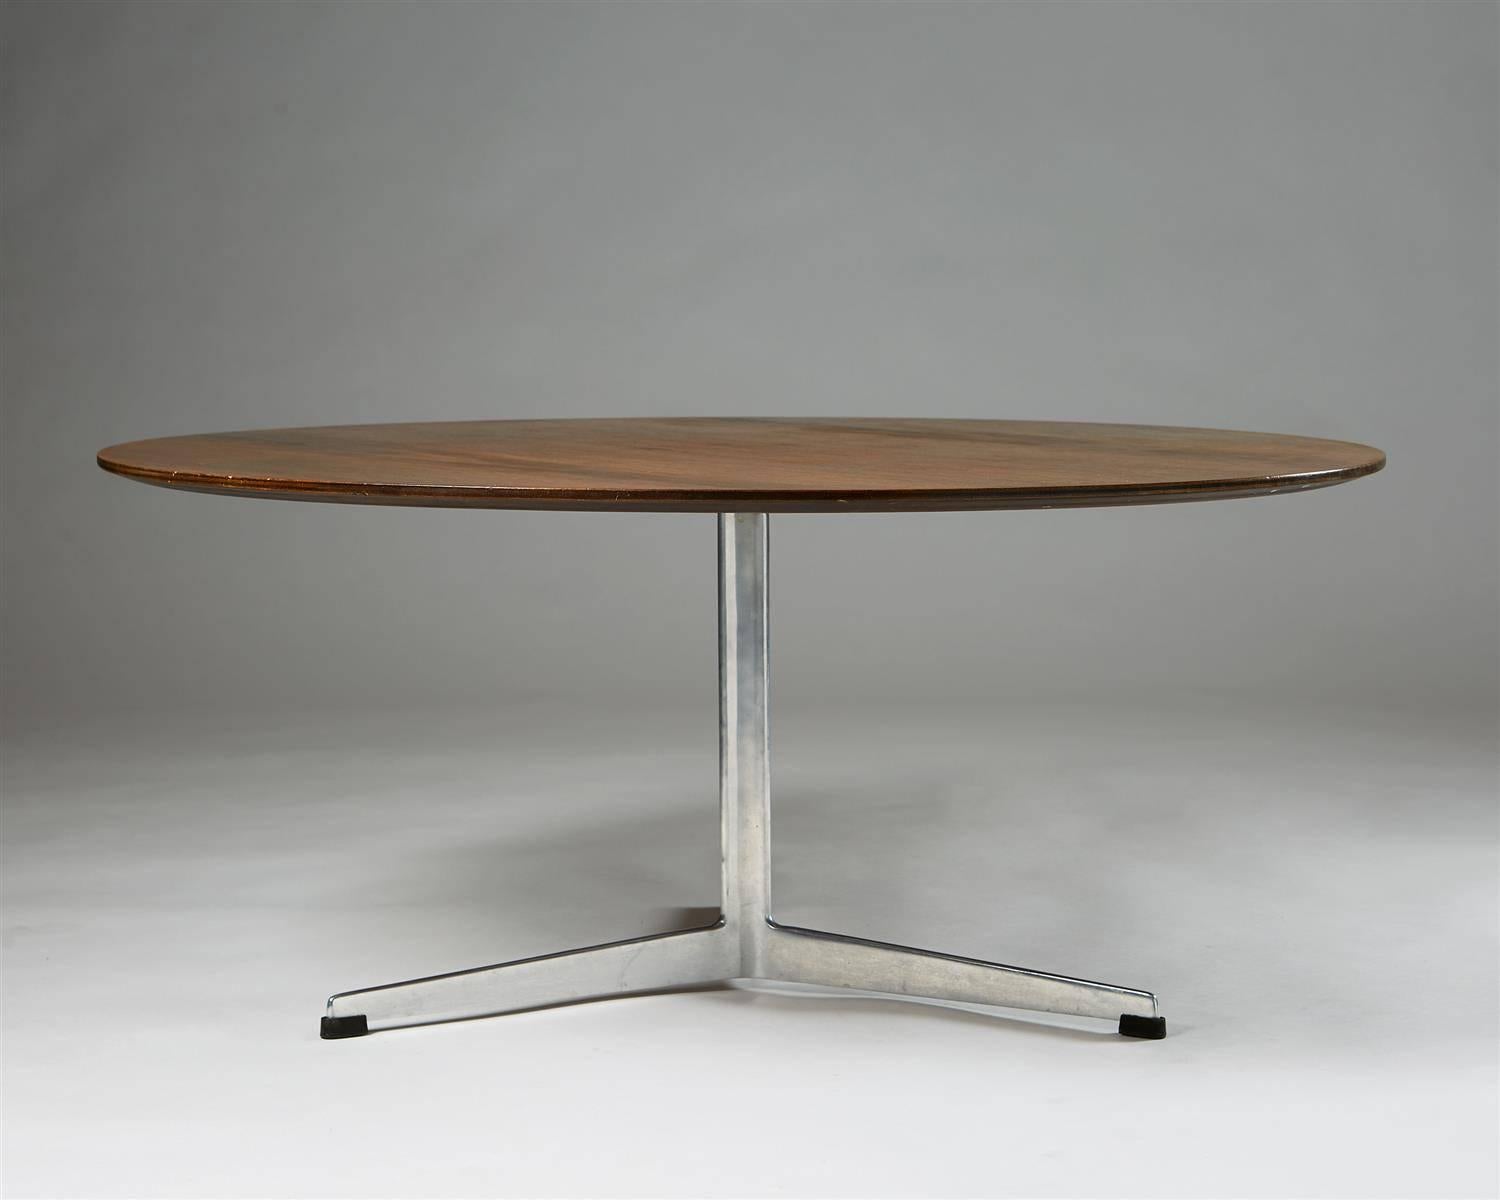 Occasional table designed by Arne Jacobsen for Fritz Hansen, Denmark, 1960s.
Aluminium and rosewood.